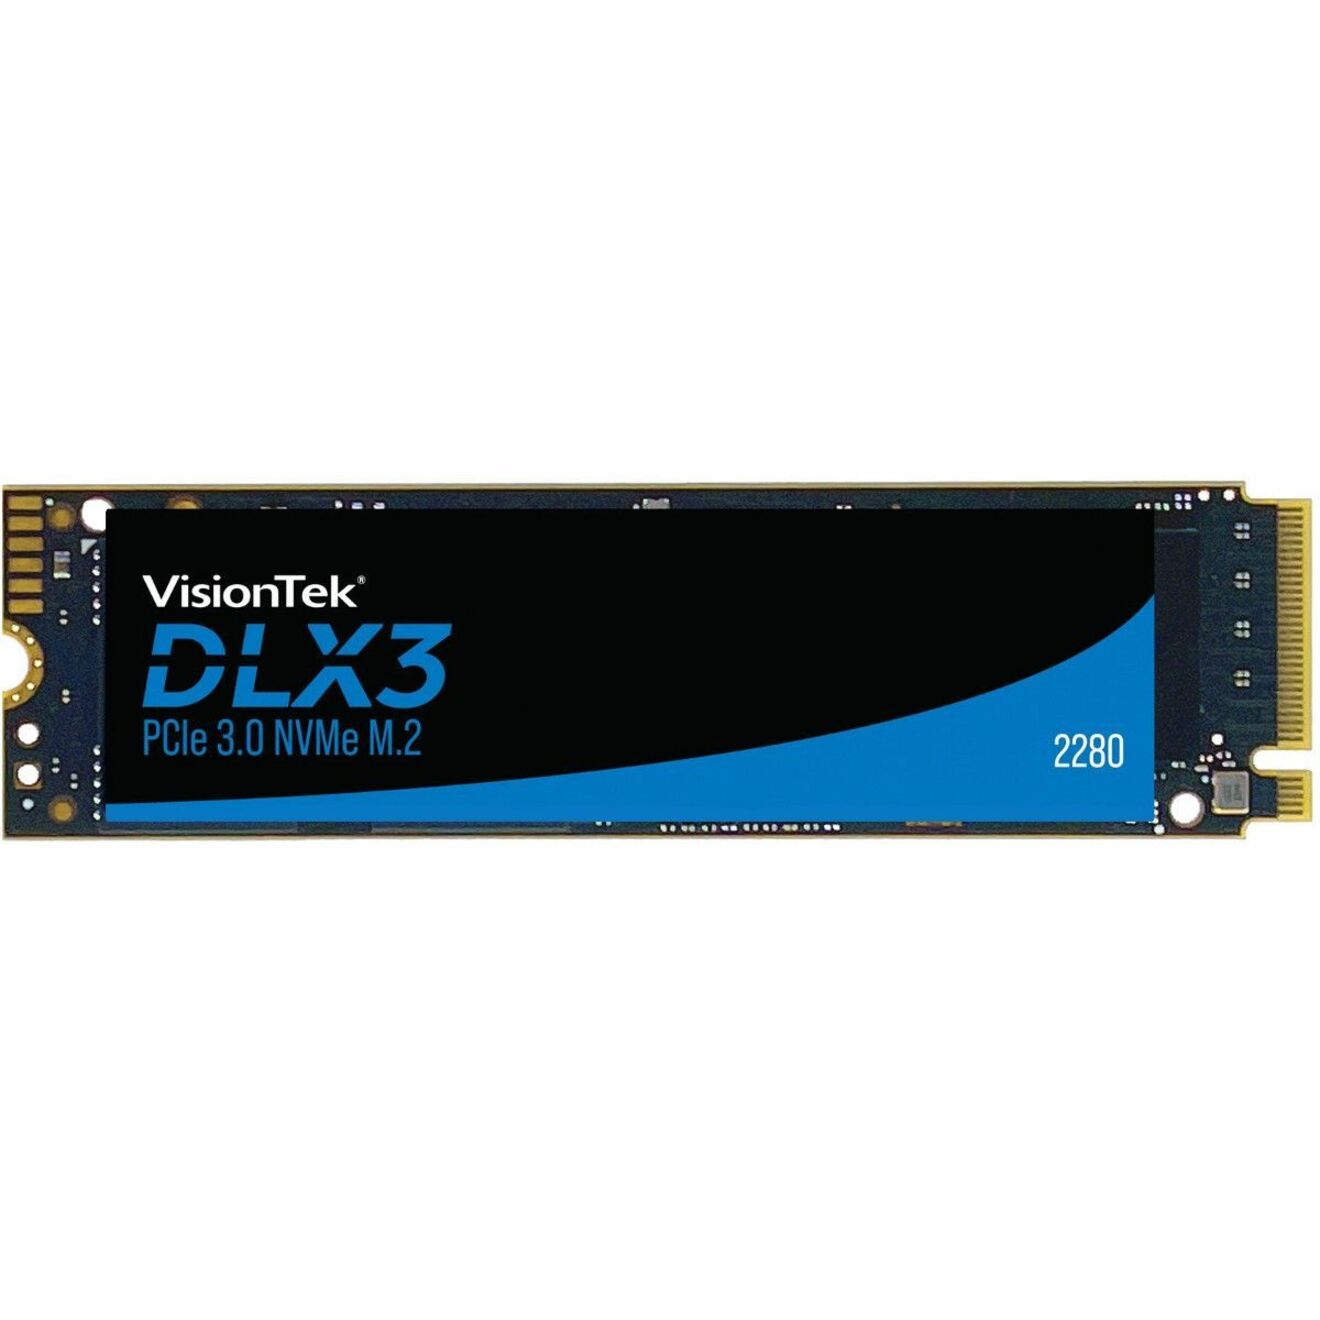 VisionTek 901556 DLX3 2280 M.2 PCIe 3.0 x4 SSD (NVMe), 1TB Storage Capacity